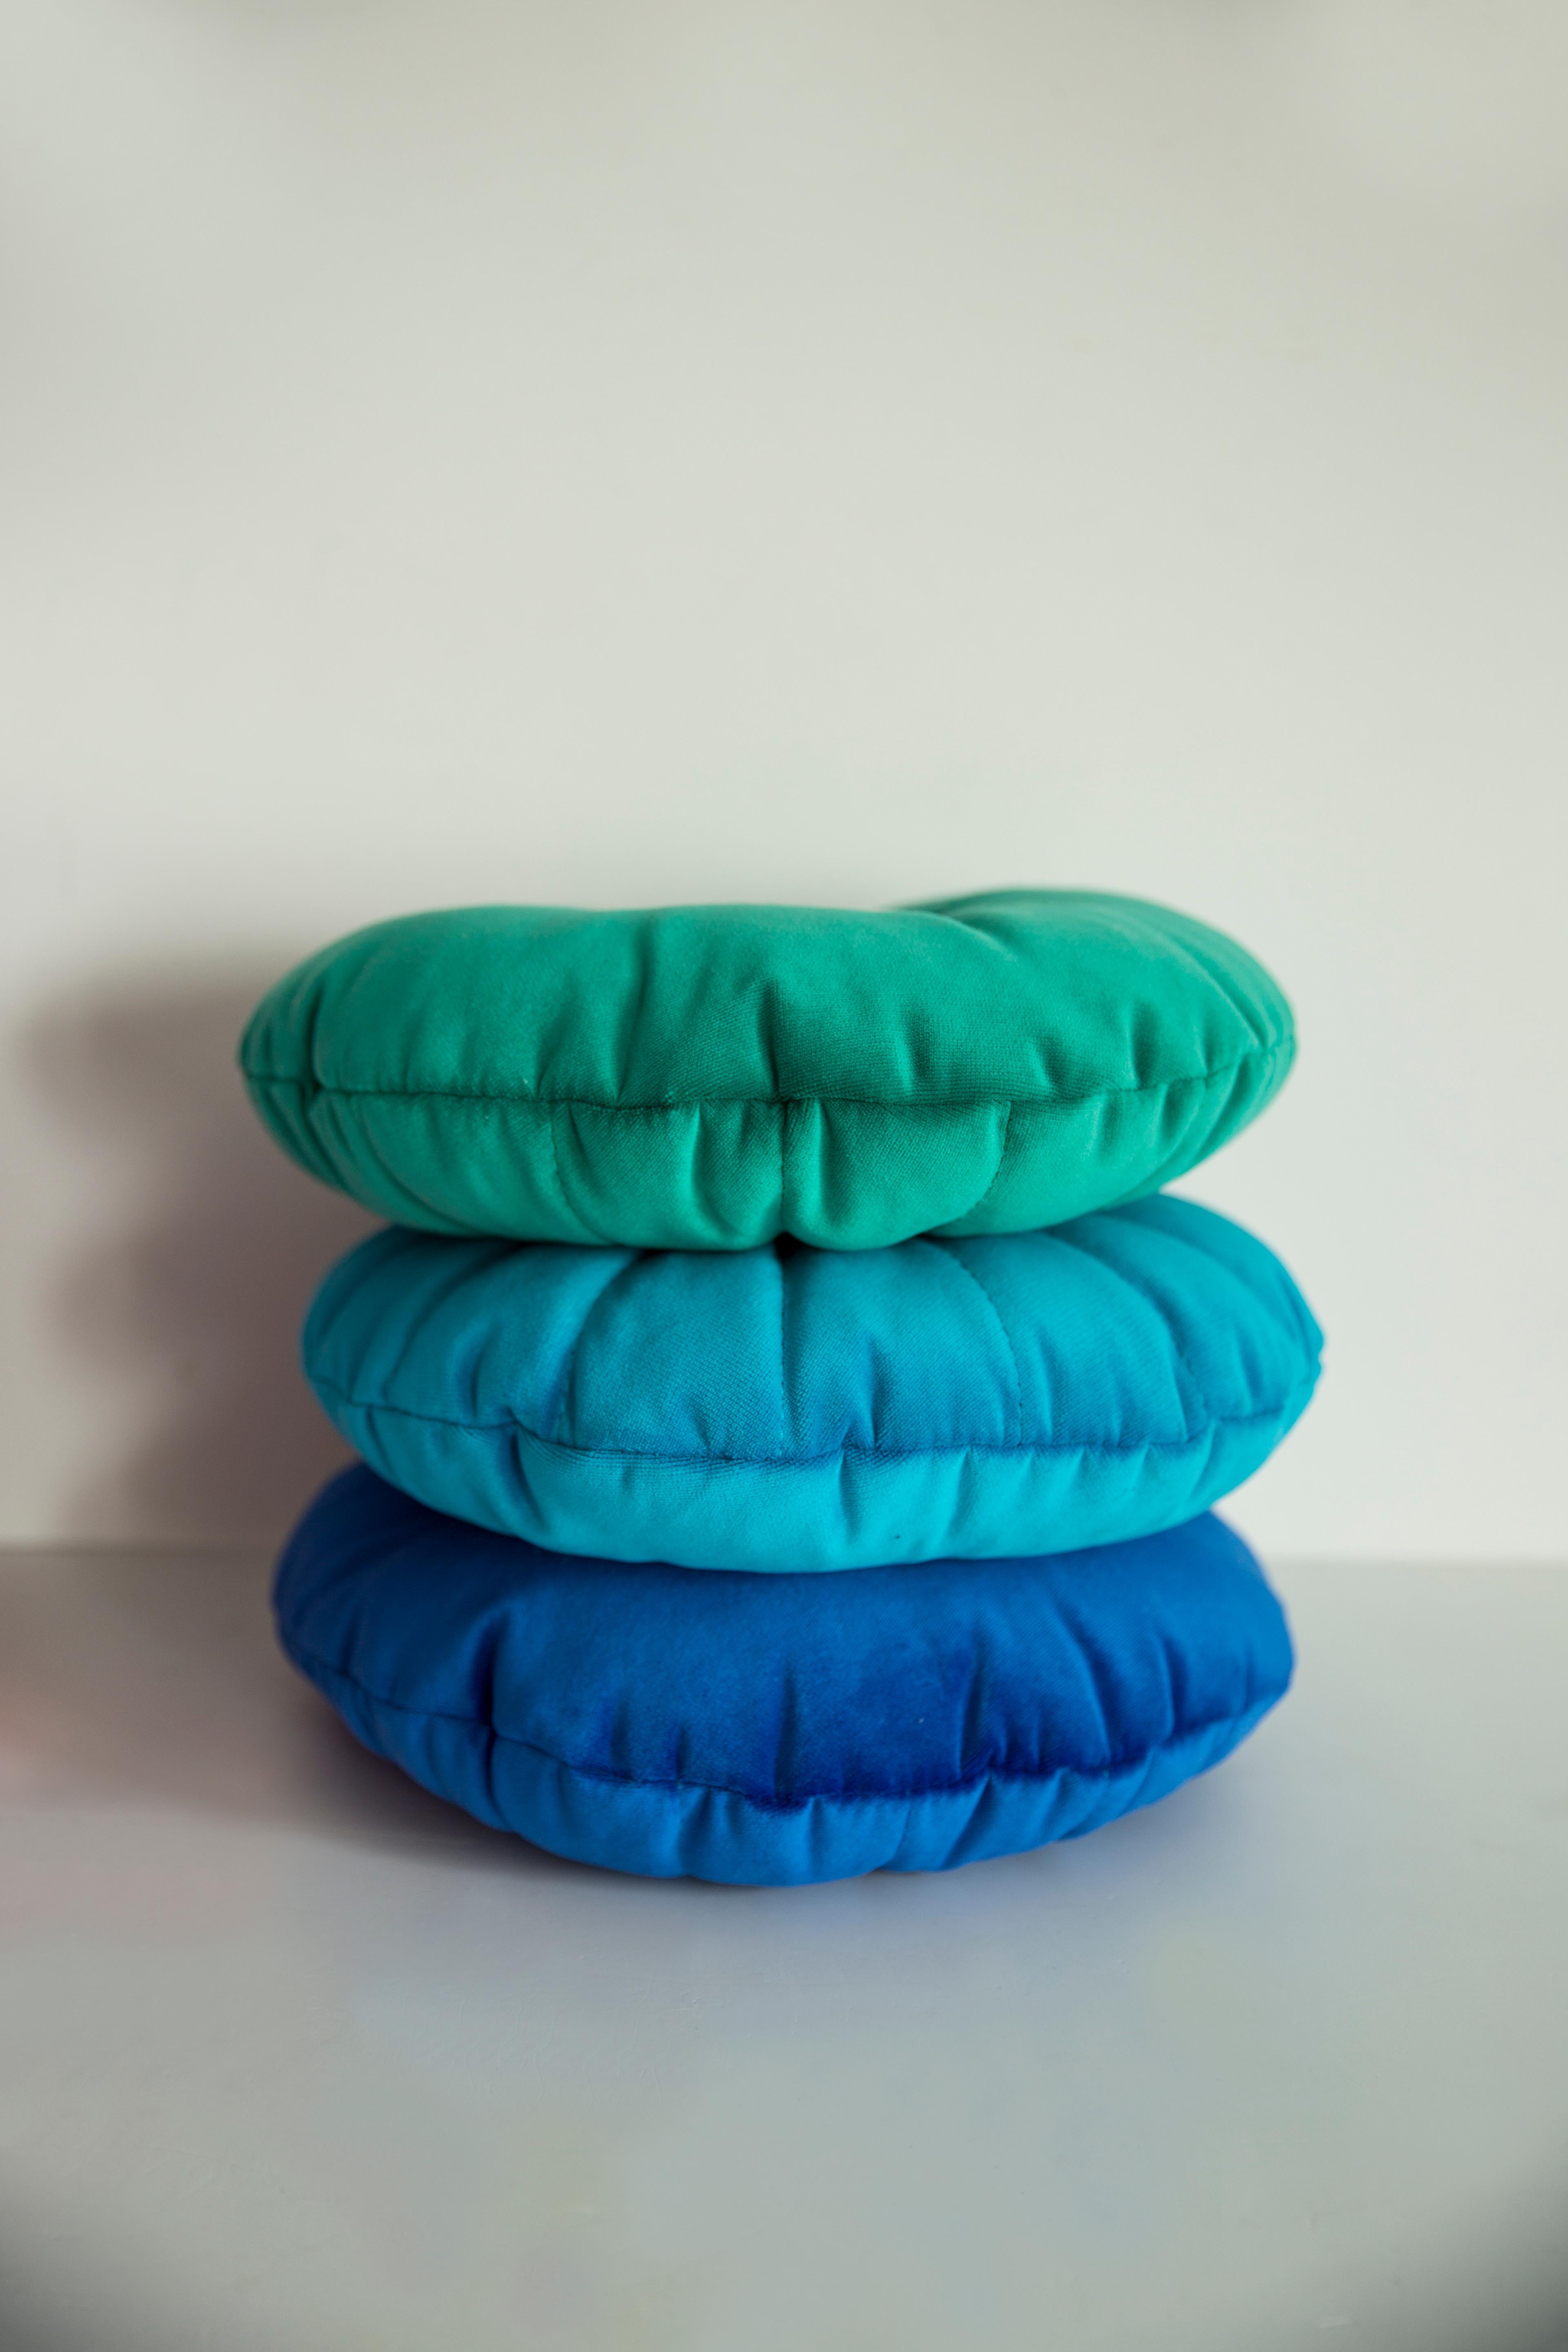 Polish Small Contemporary Blue Velvet Pillow, Vintola Studio, Europe.  For Sale